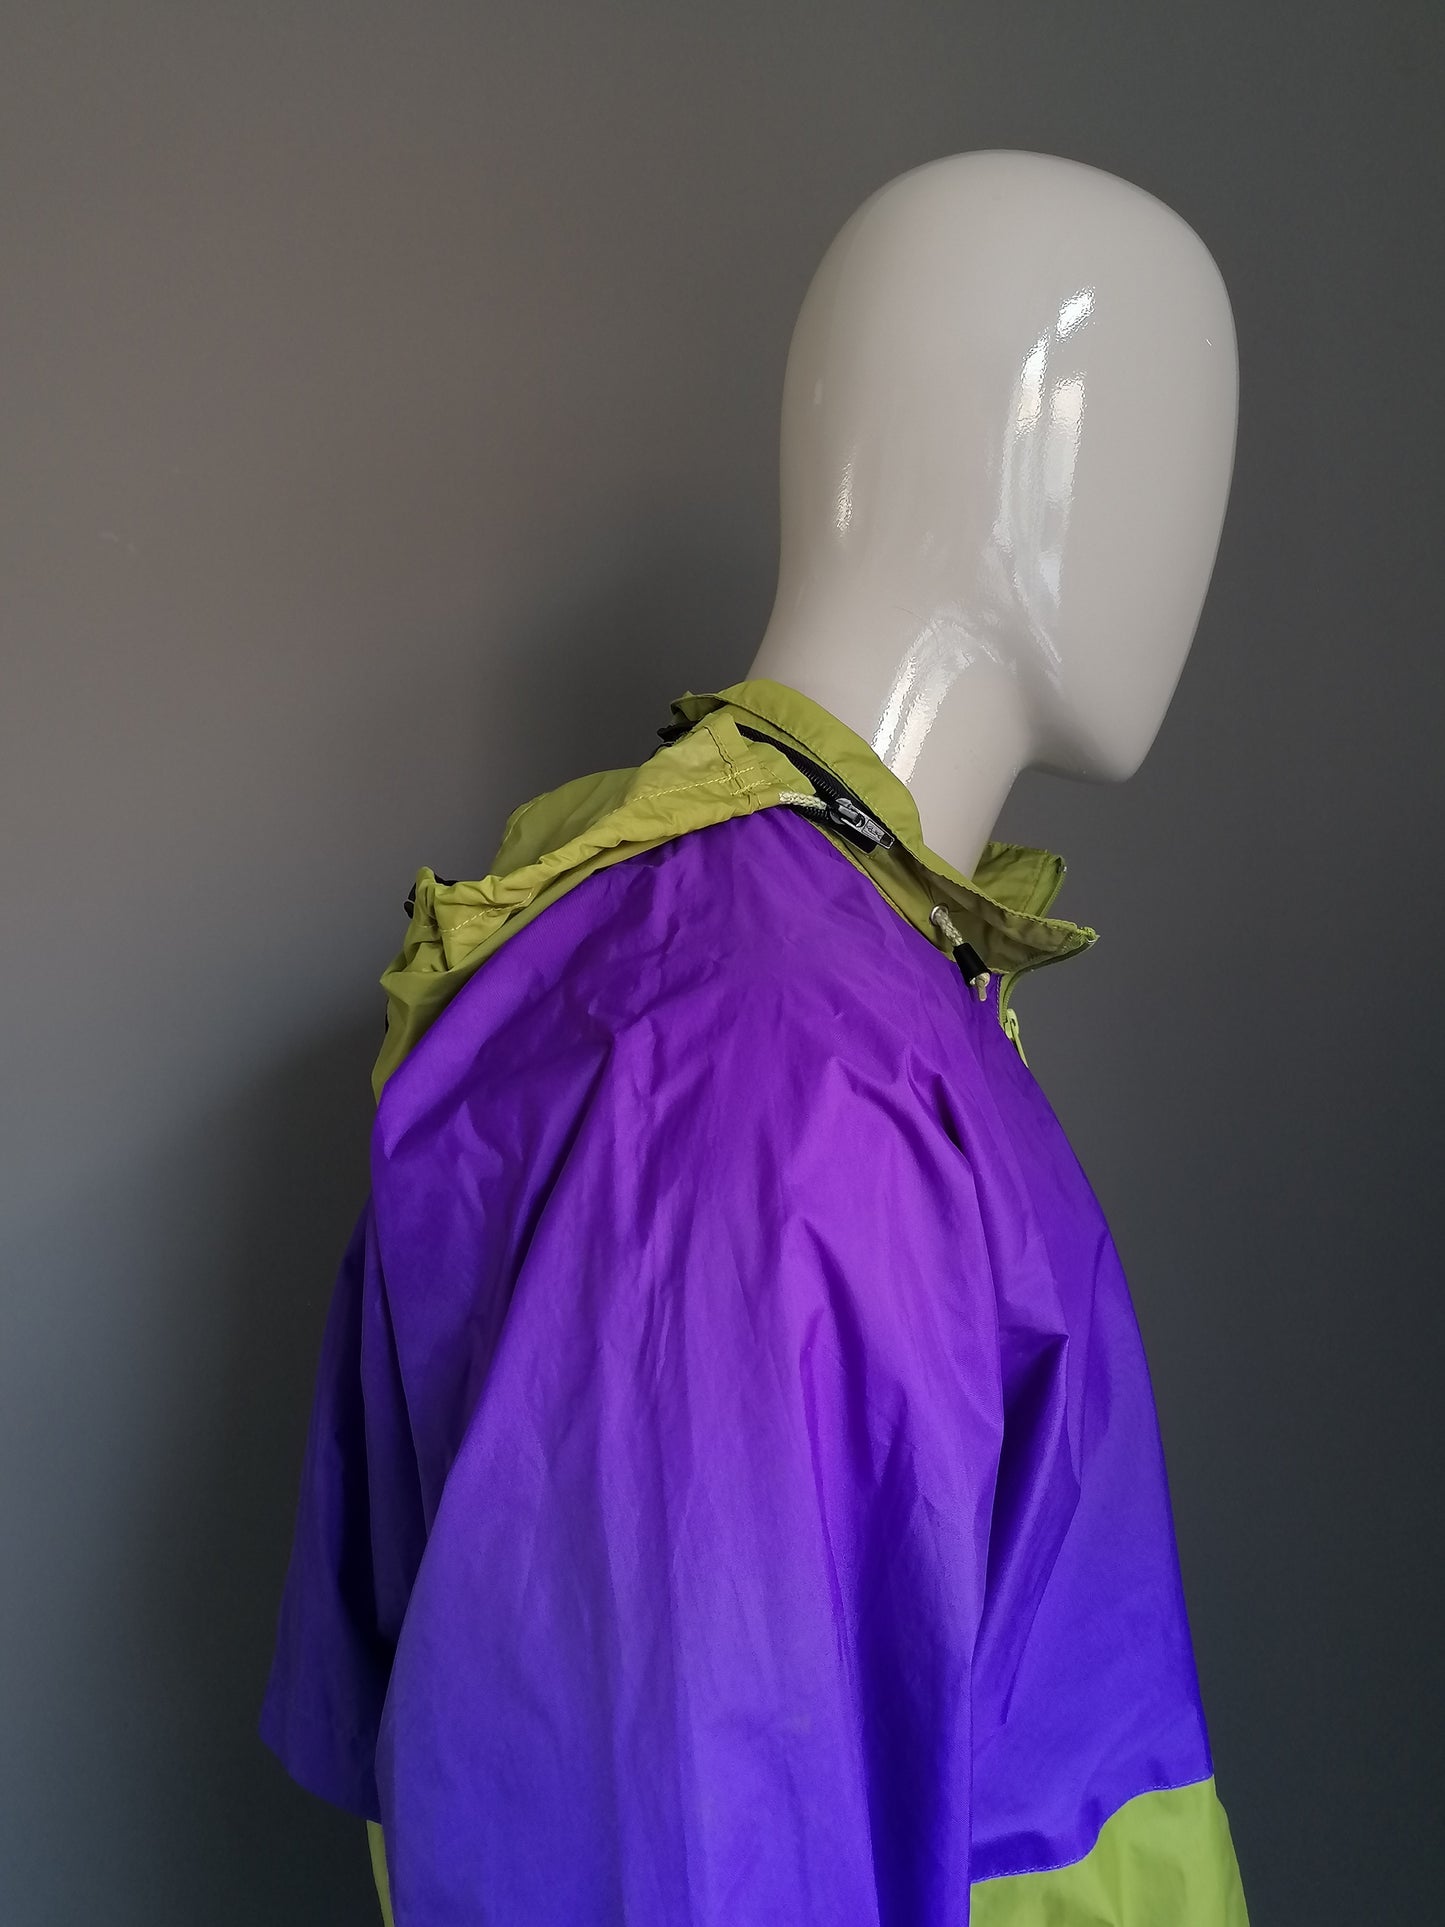 Suéter deportivo retro vintage / gato del viento. Negro verde púrpura. Tamaño XXL / 2XL